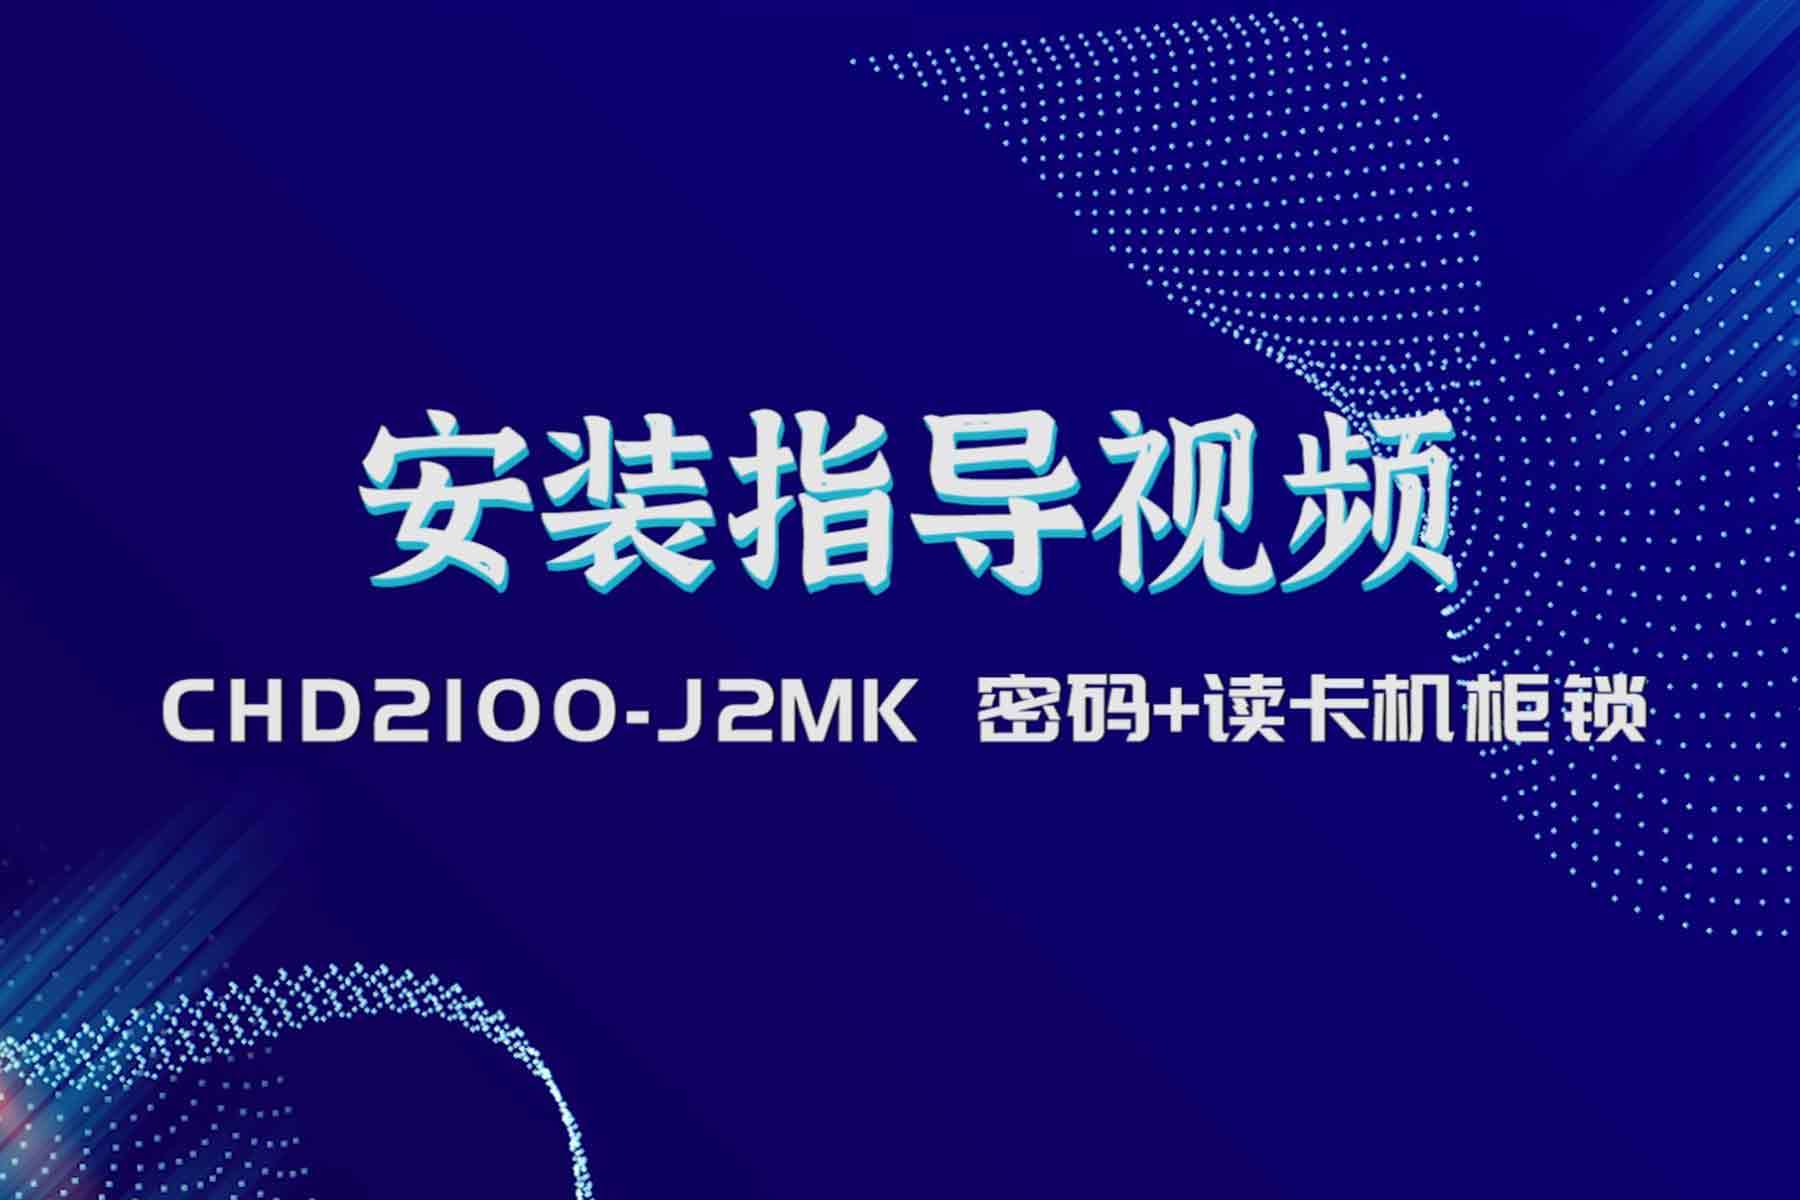 2100-J2MK装置指点视频